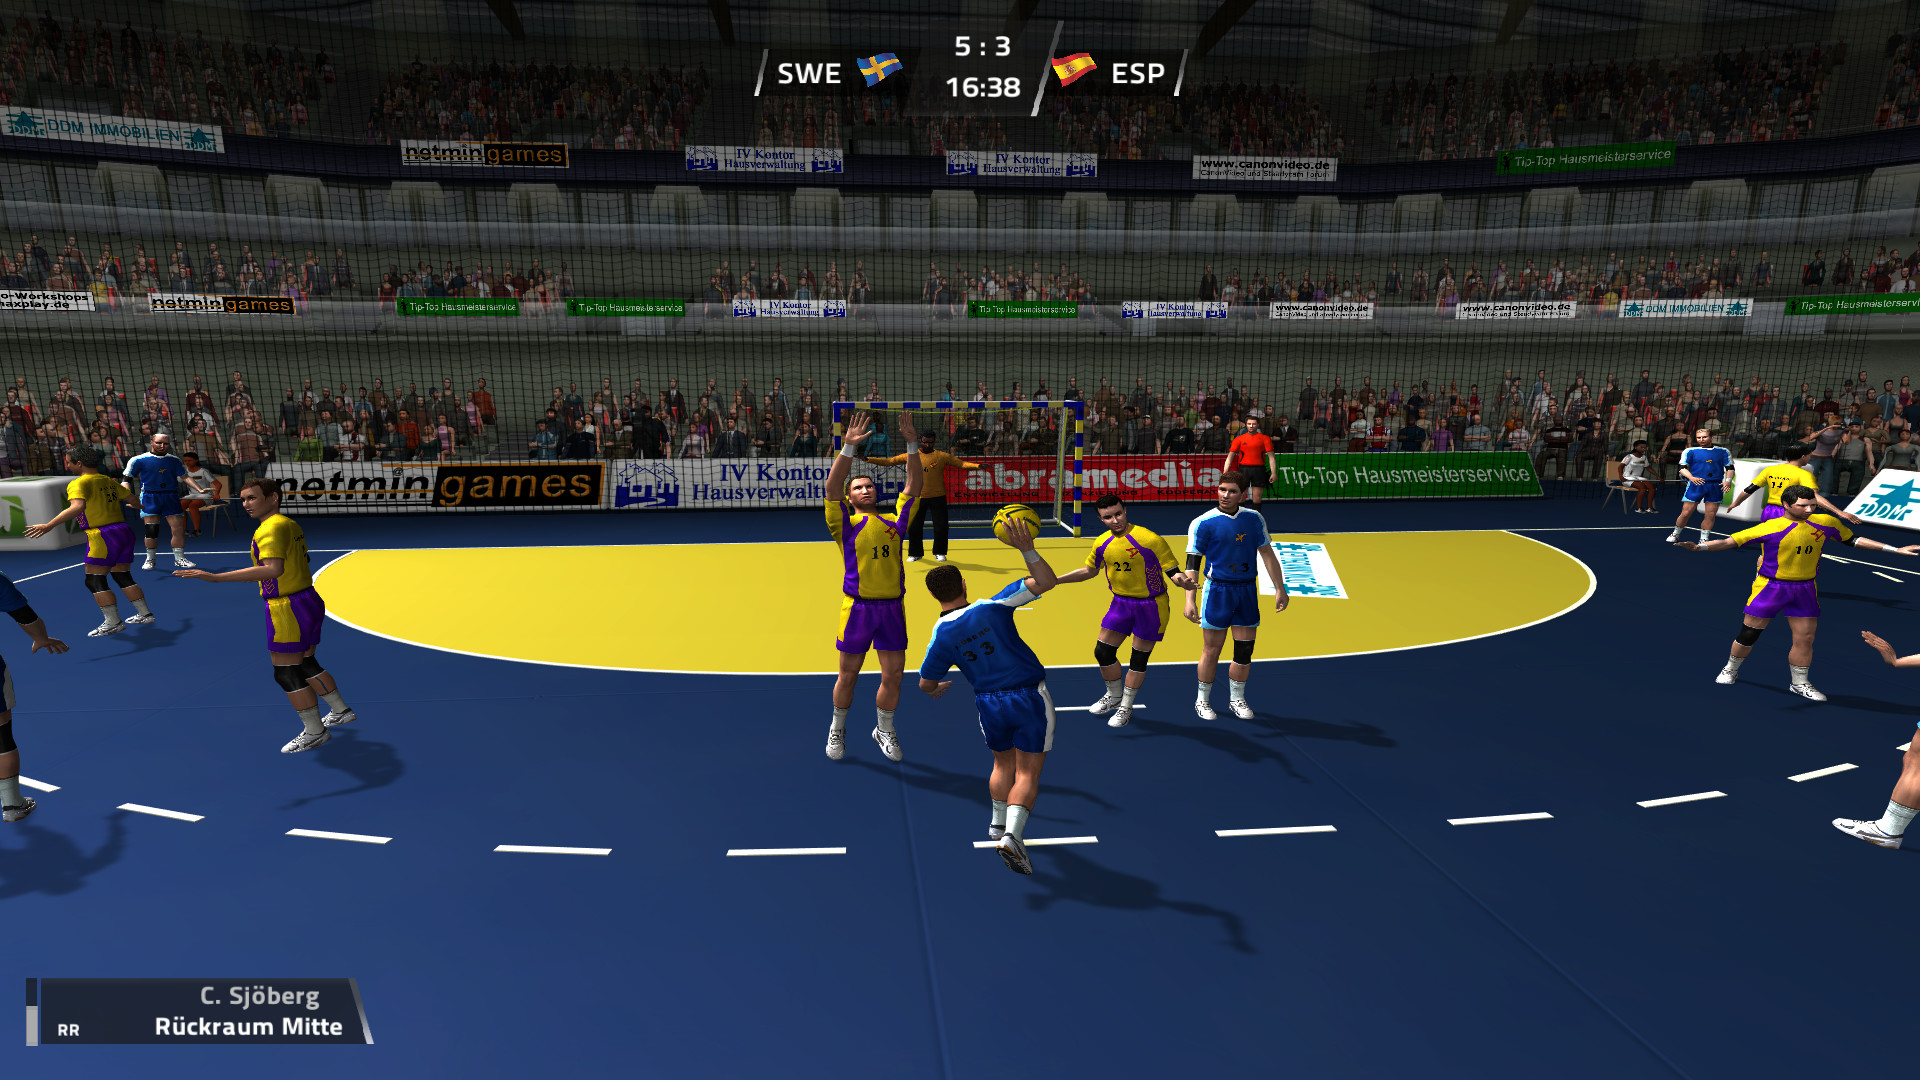 Handball Action Total screenshot